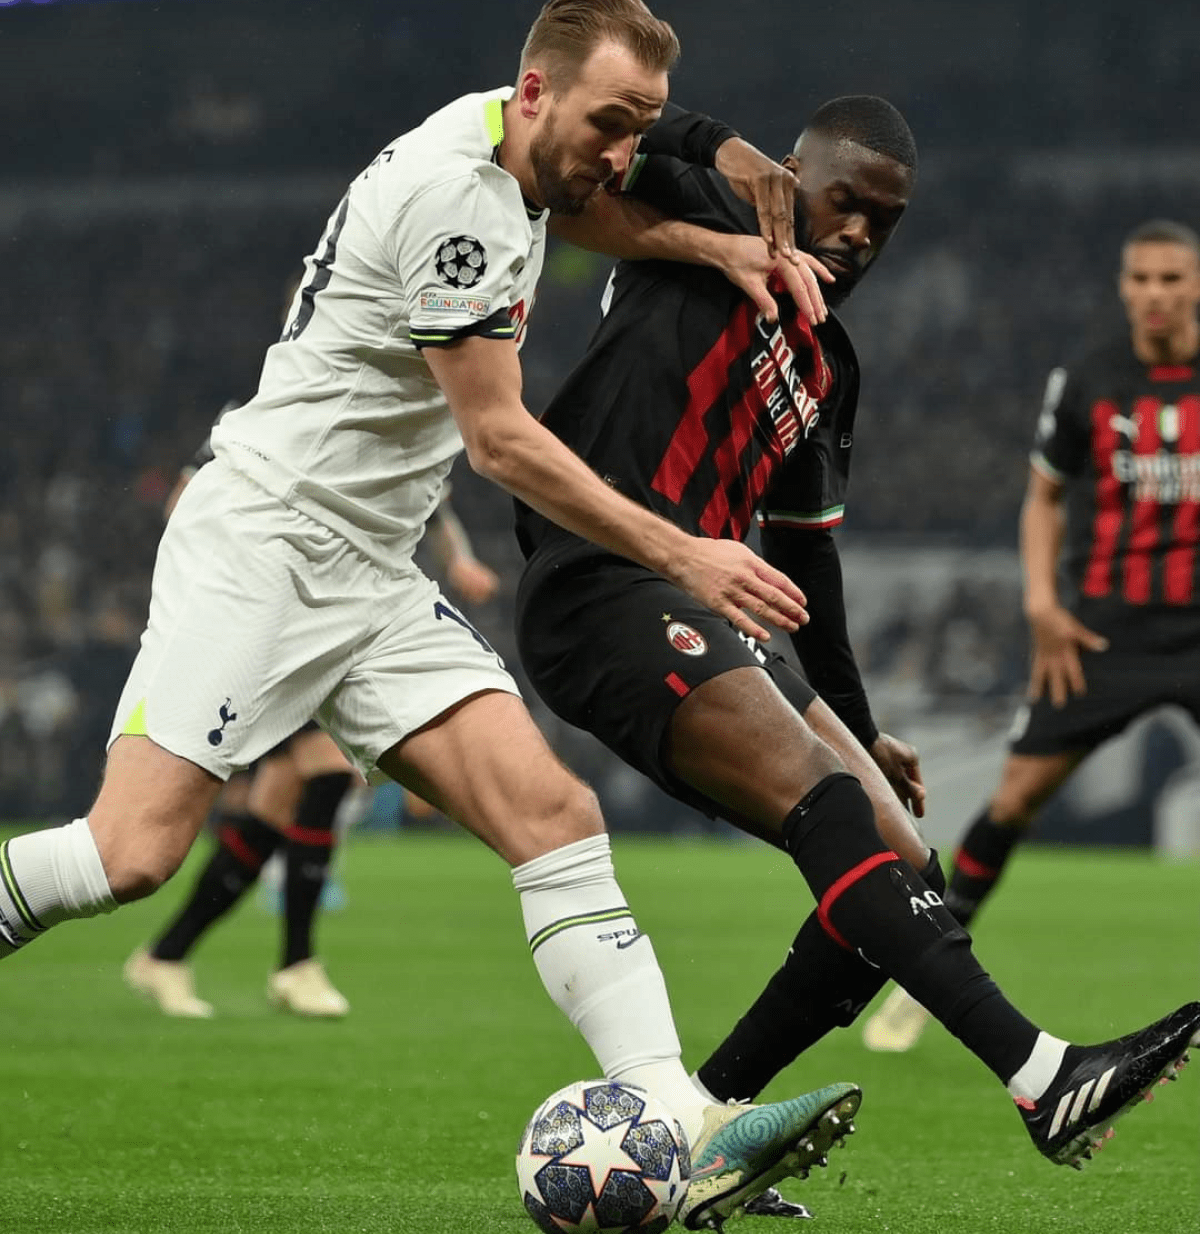 Tottenham-Milan (0-0): analisi tattica e considerazioni